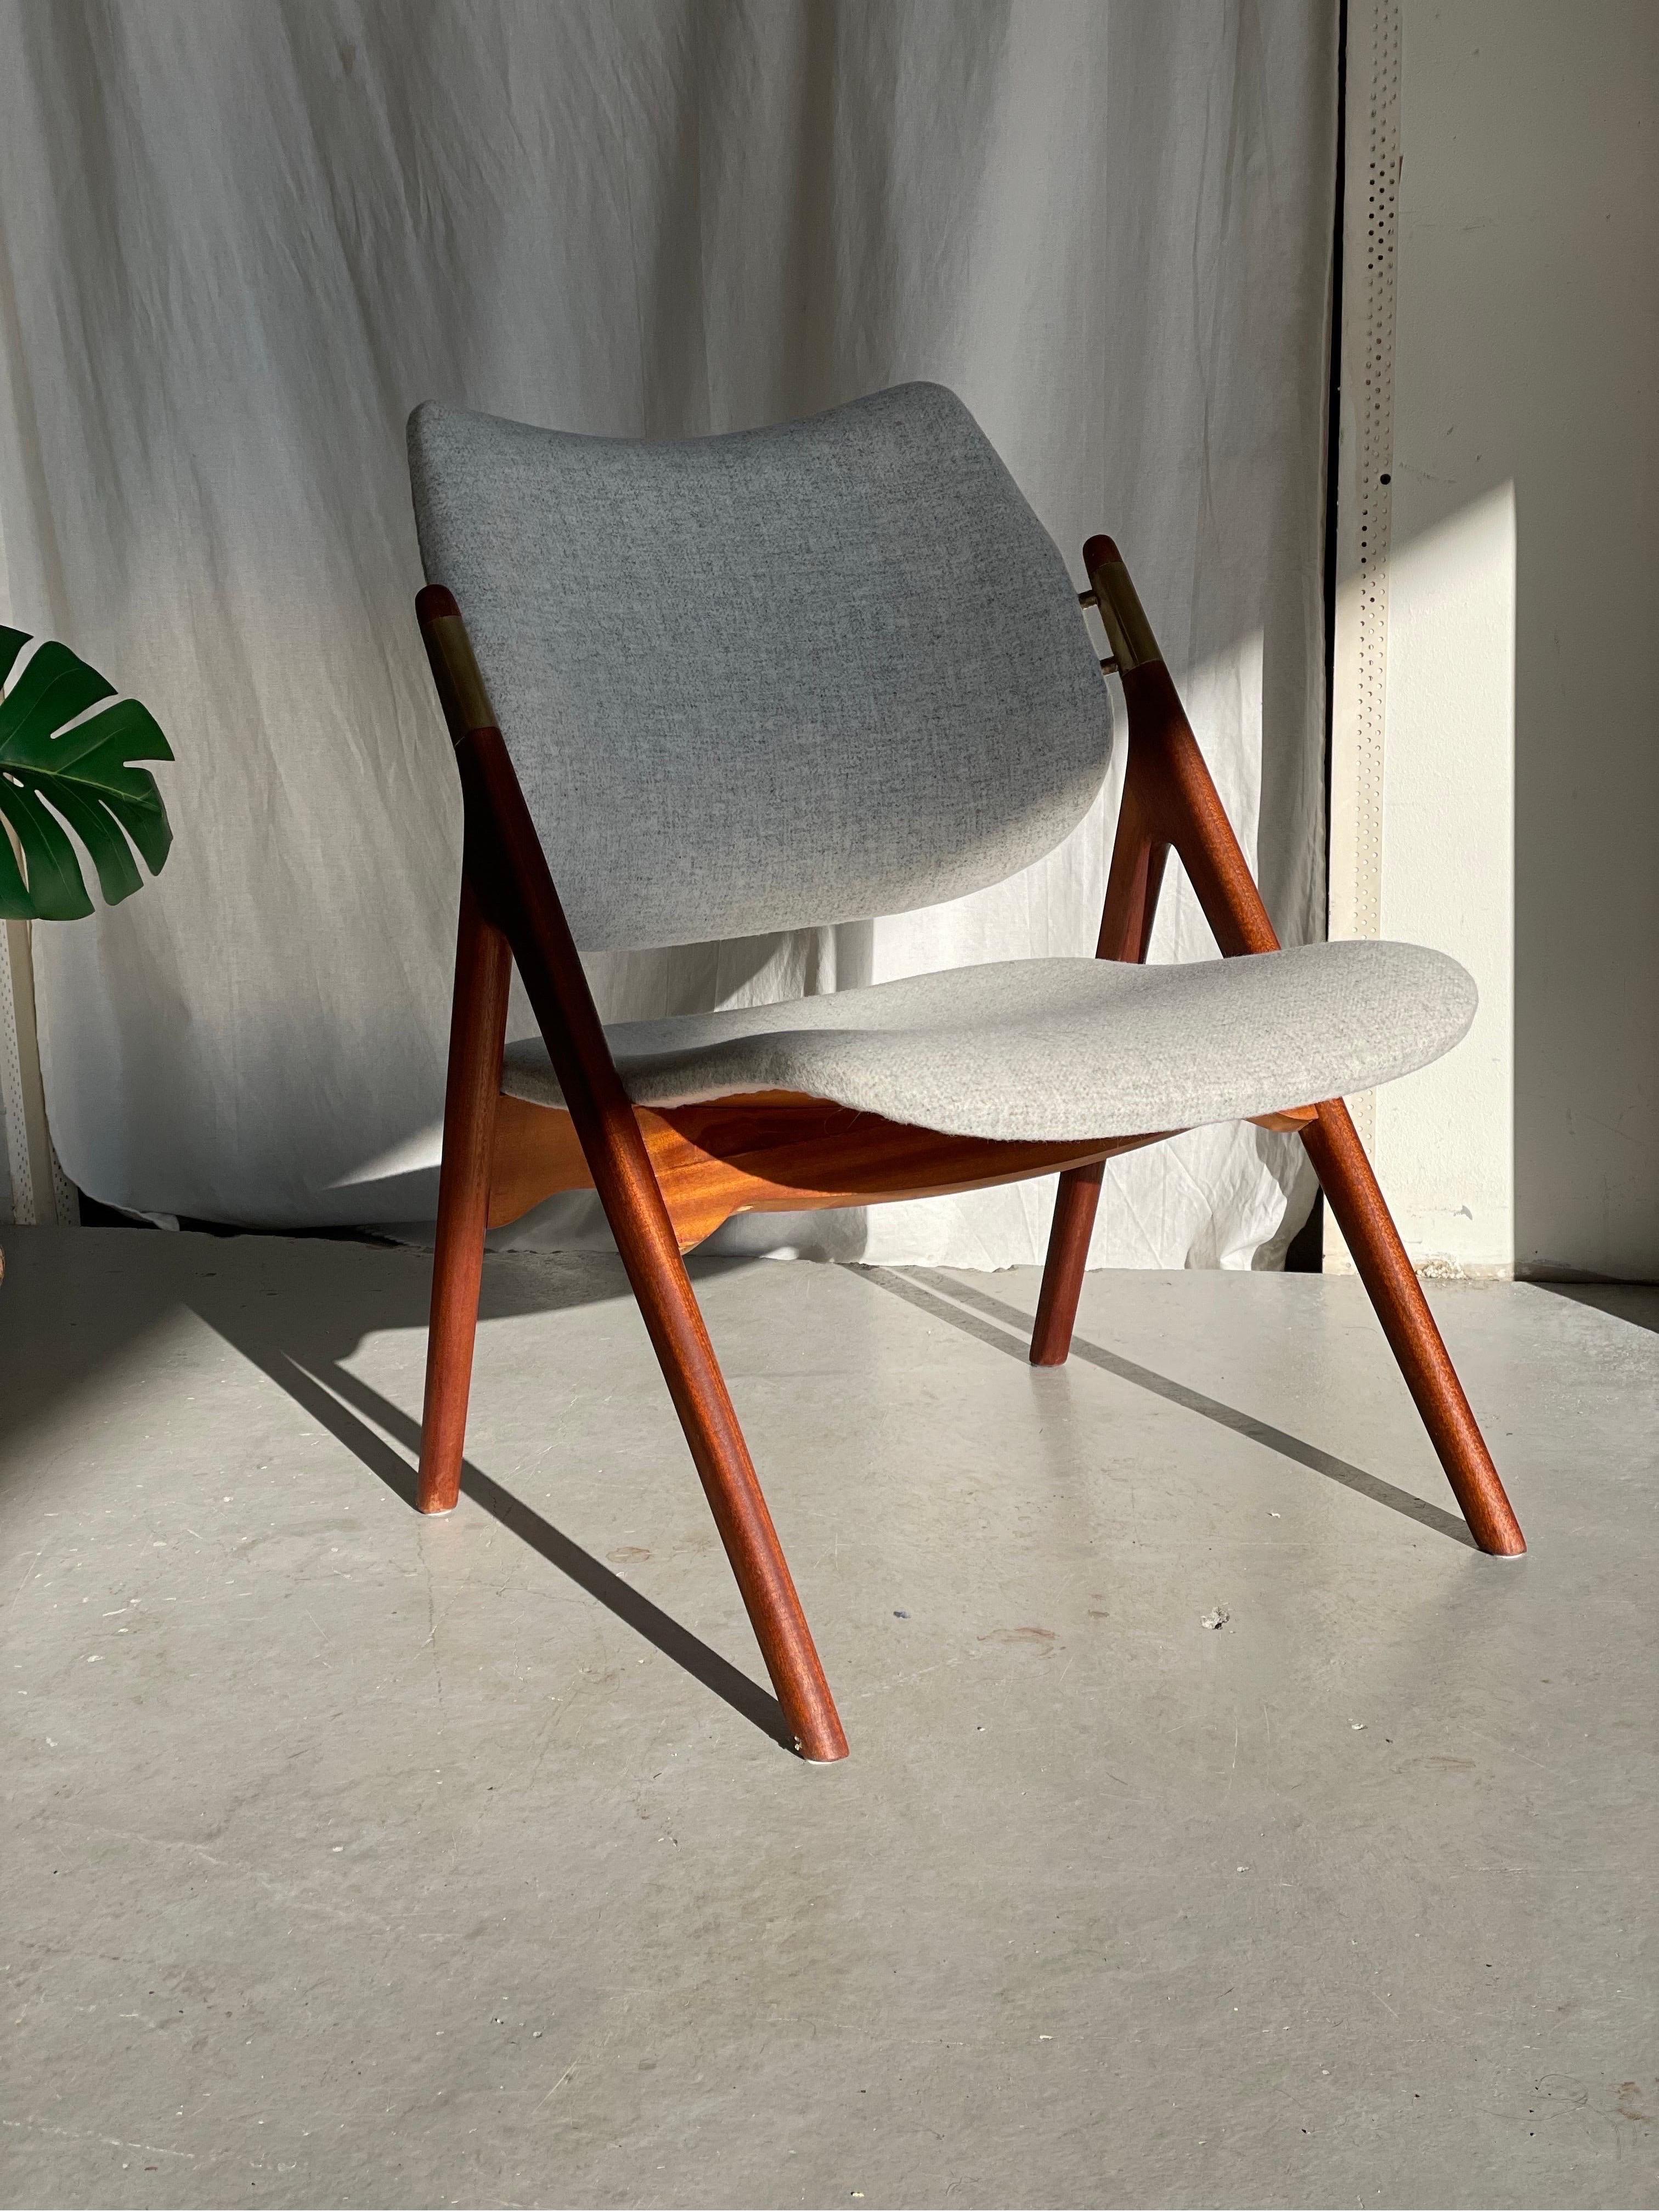 Scandinavian easy chair; model 46 designed by Olav Haug and produced at Elverum Møbel - og Trevarefabrikk, Norway
The chair is reupholstered in woolen fabric from Gudbrandsdalens Uldvarefabrikk, Norway.

